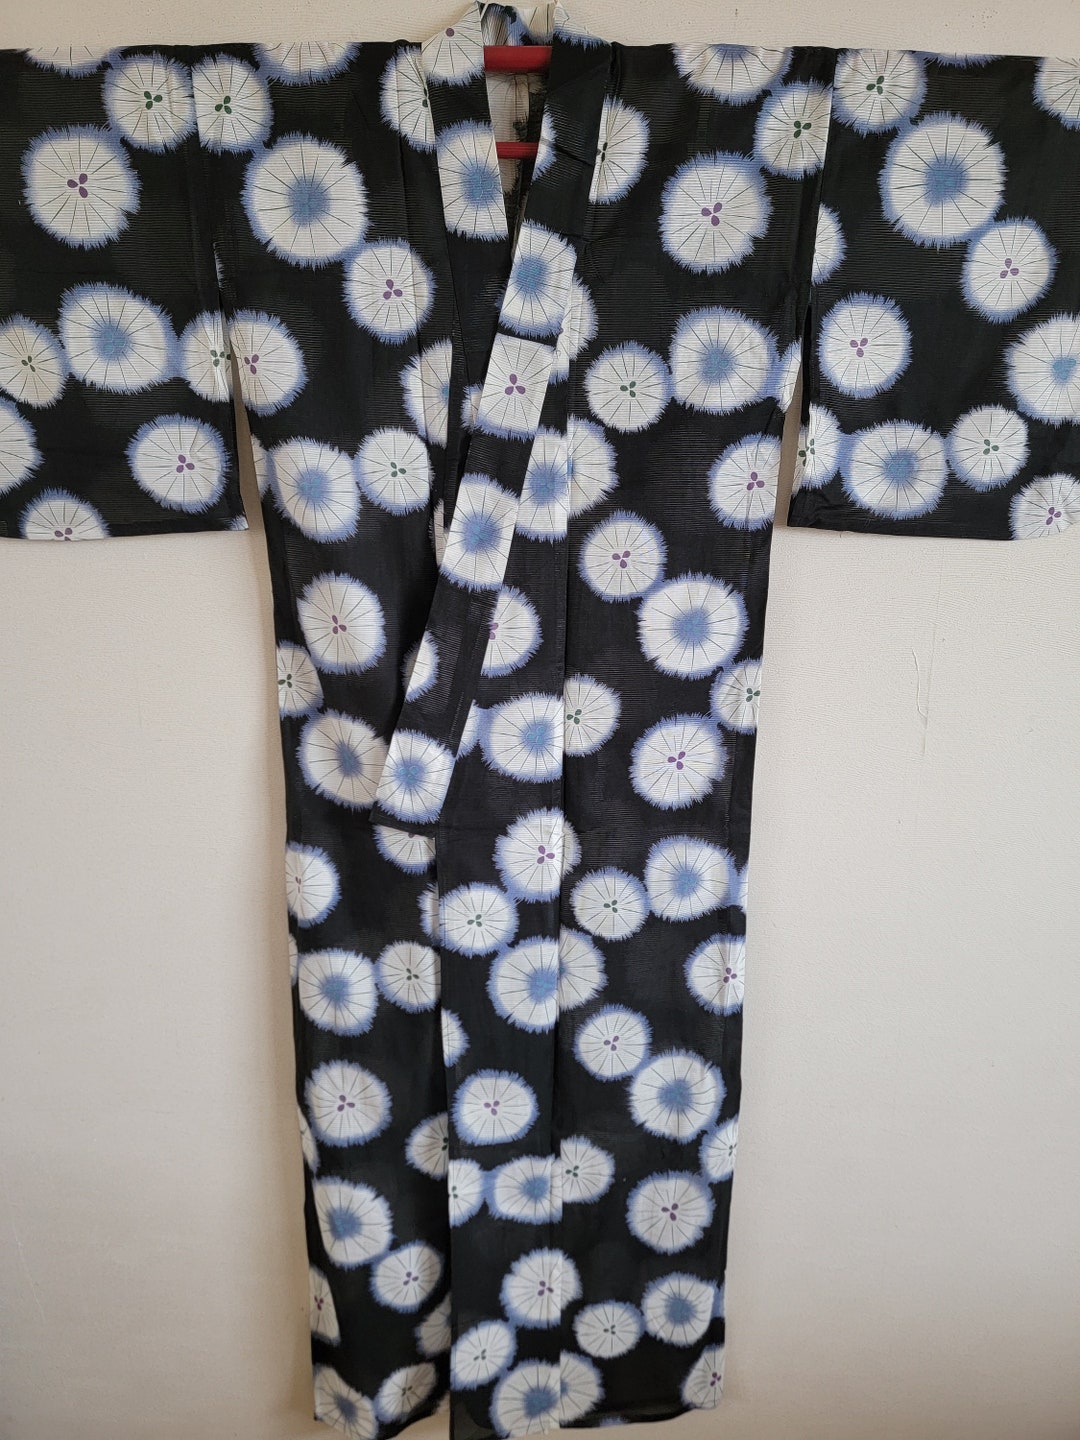 Cotton KIMONO Robe Yukata, Dressing,lingerie, Nightwear,traditional ...